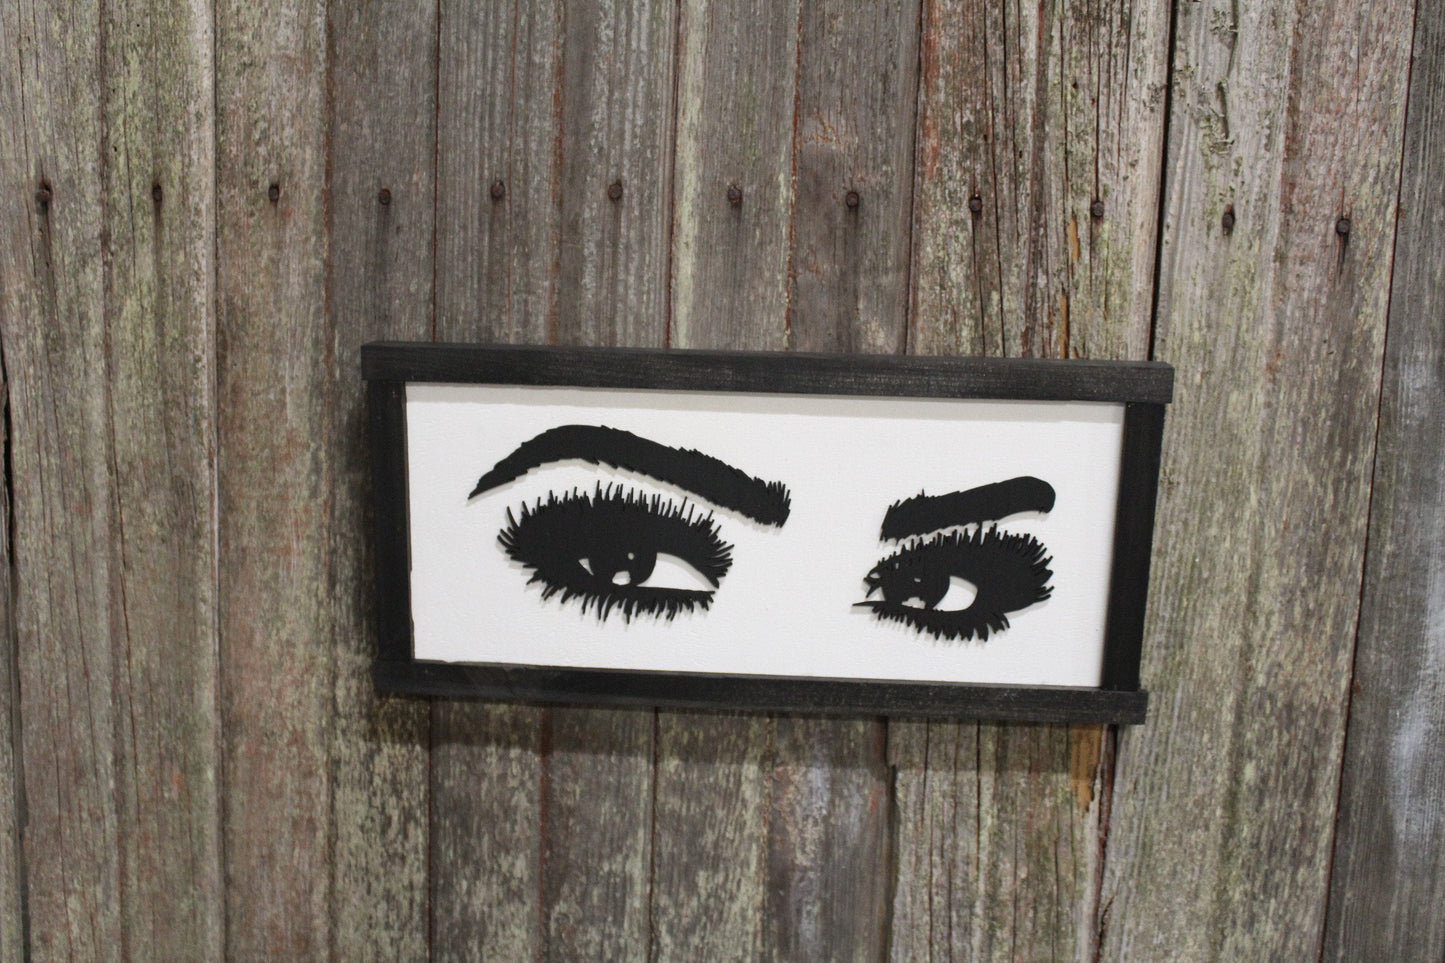 Ladies Eyes 3D Lashes Makeup Wood Sign Raised Image Feminine Primitive Wall Hanging Rustic Decor Salon Beauty Parlor Decoration Black White